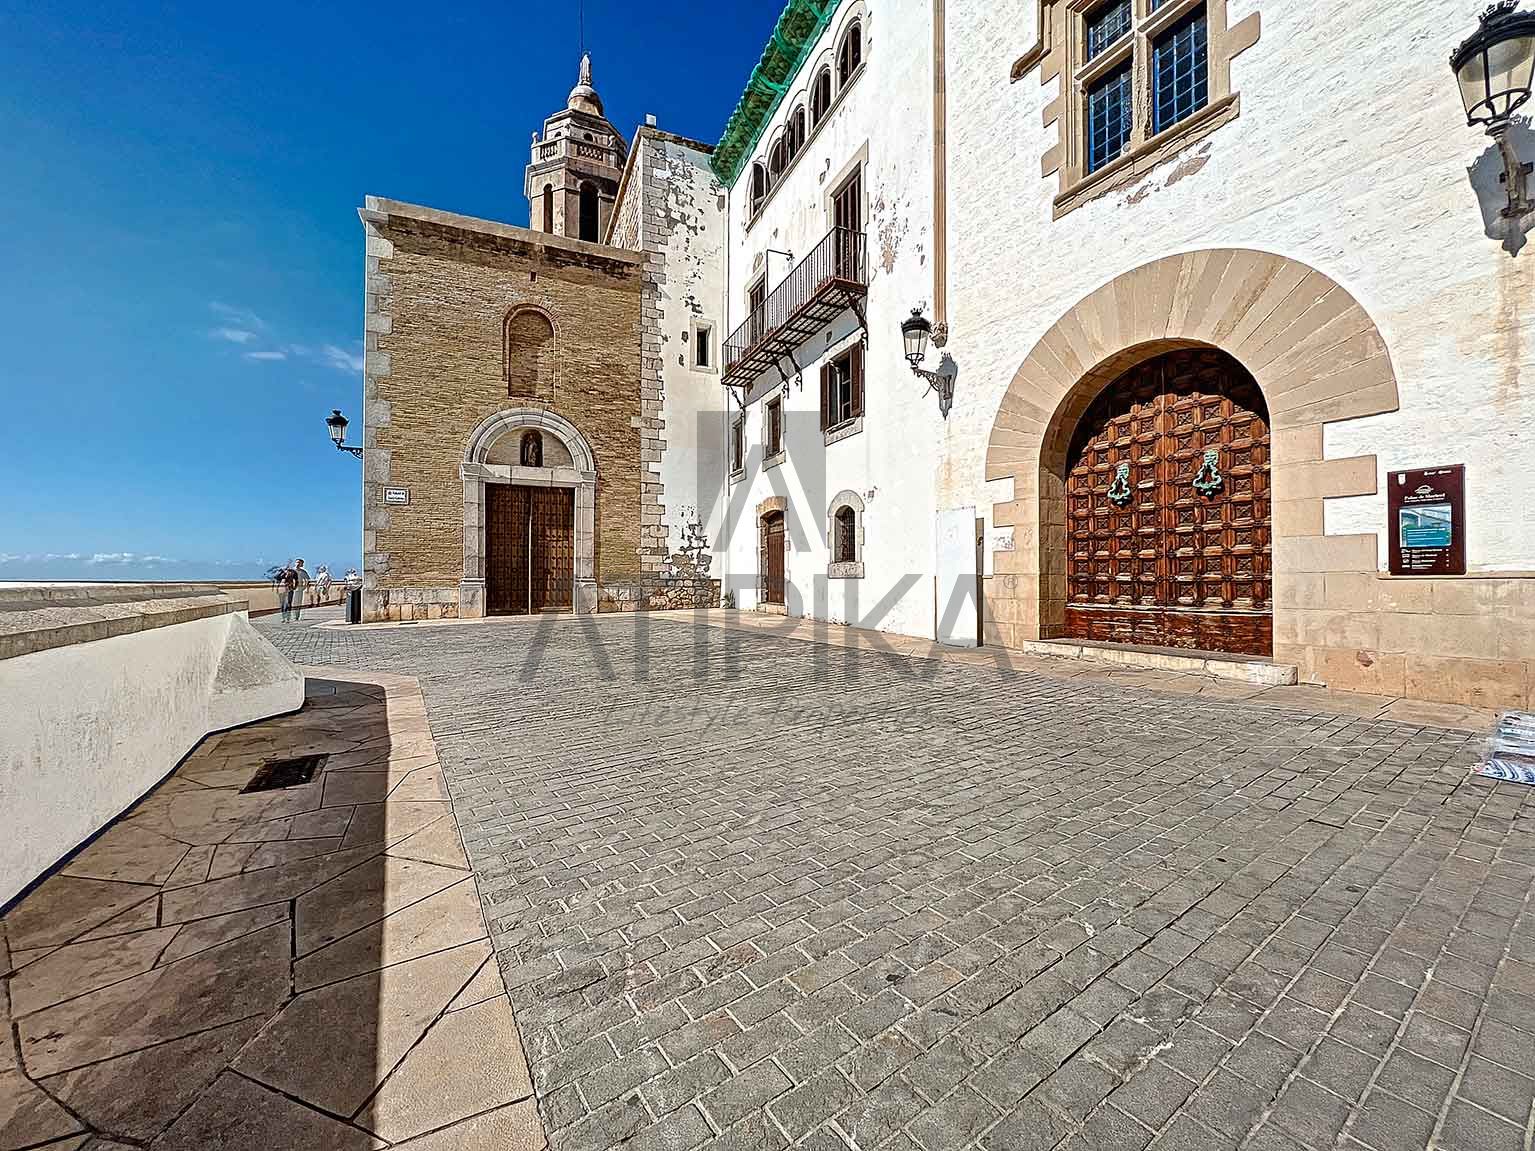 Villa for sale in Sitges and El Garraf 22